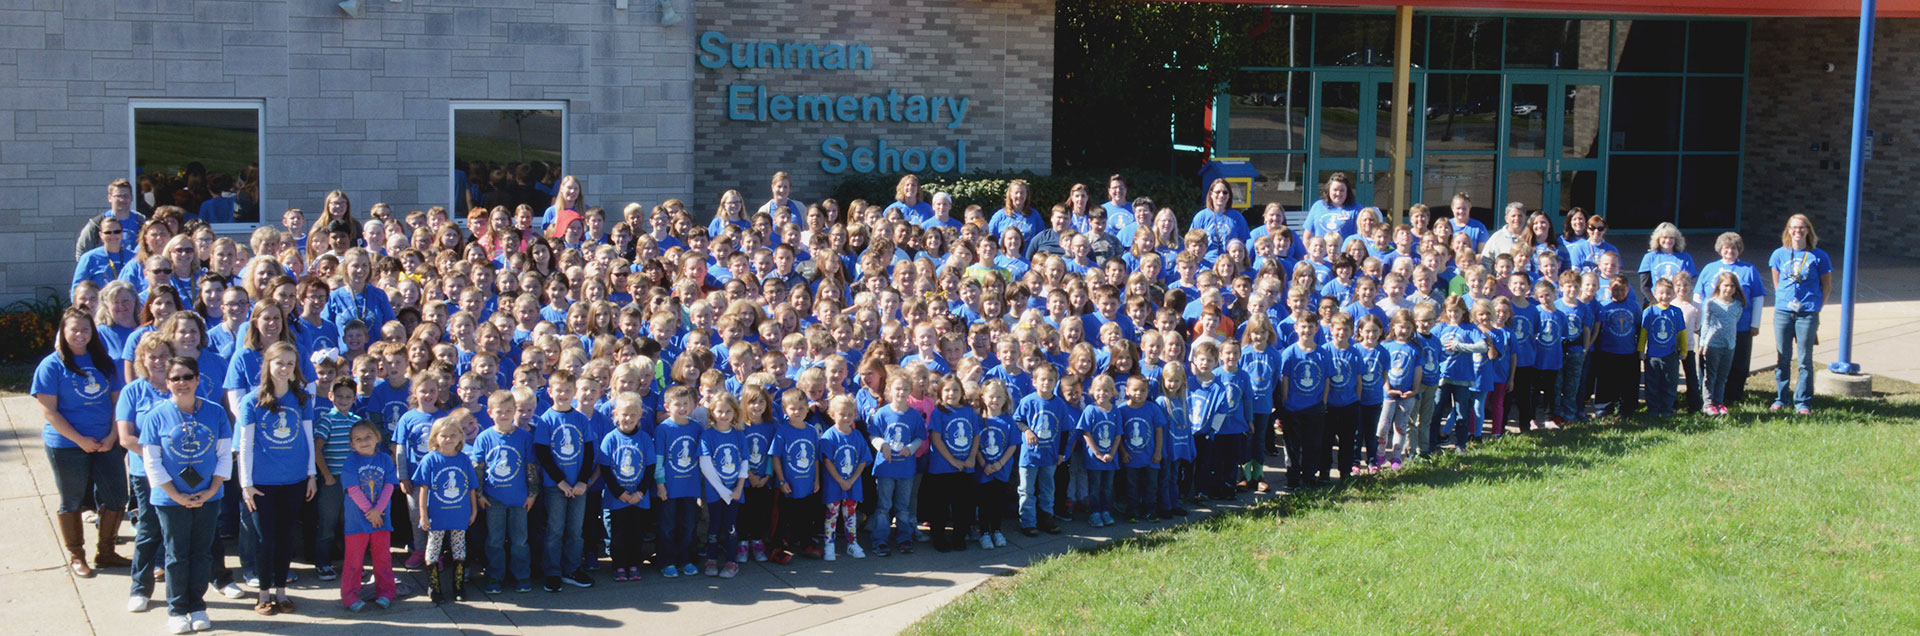 Sunman Elementary Blue Shirt Day!